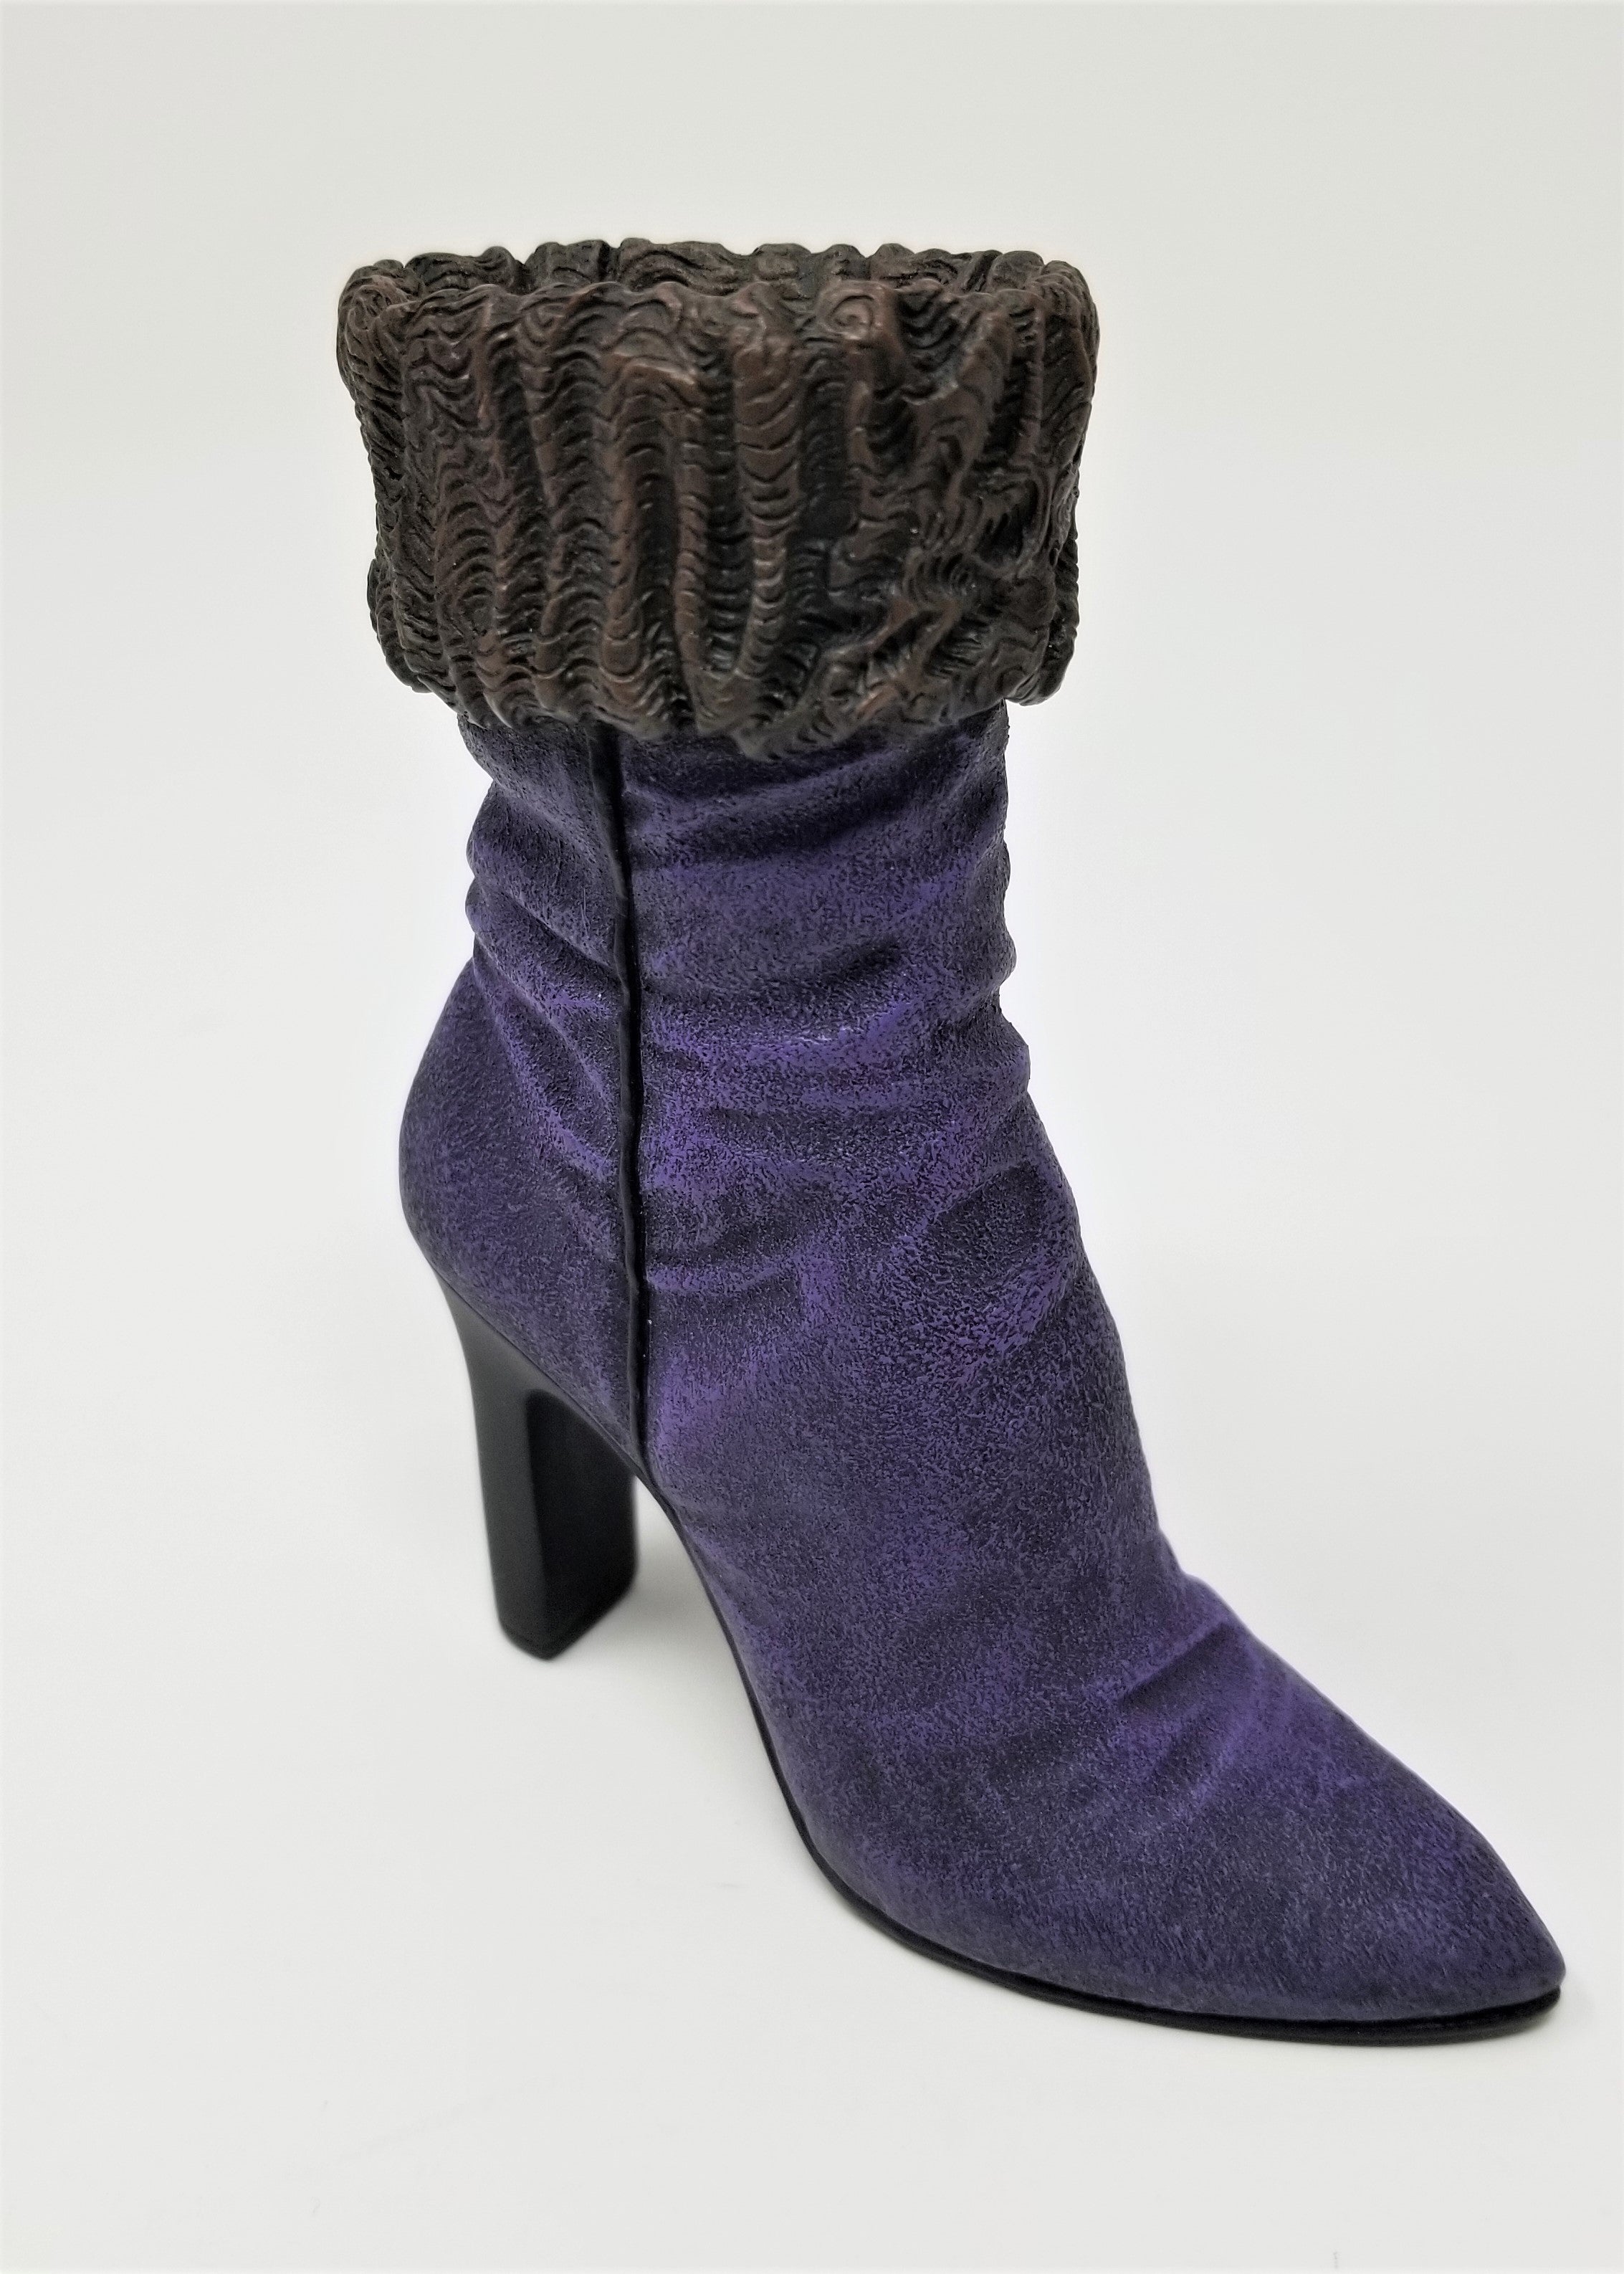 Miniature Boot Purple w/ Cuffed top High Heel